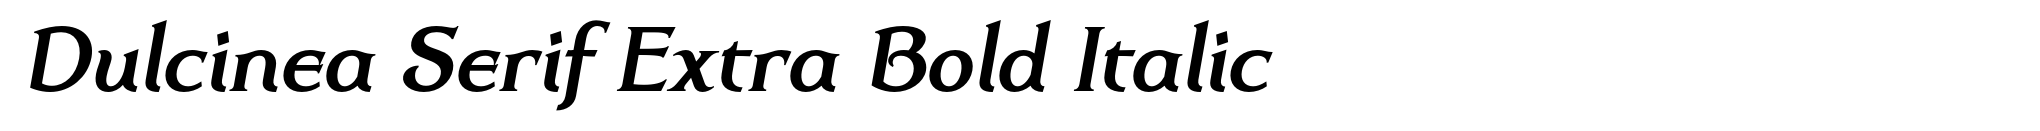 Dulcinea Serif Extra Bold Italic image